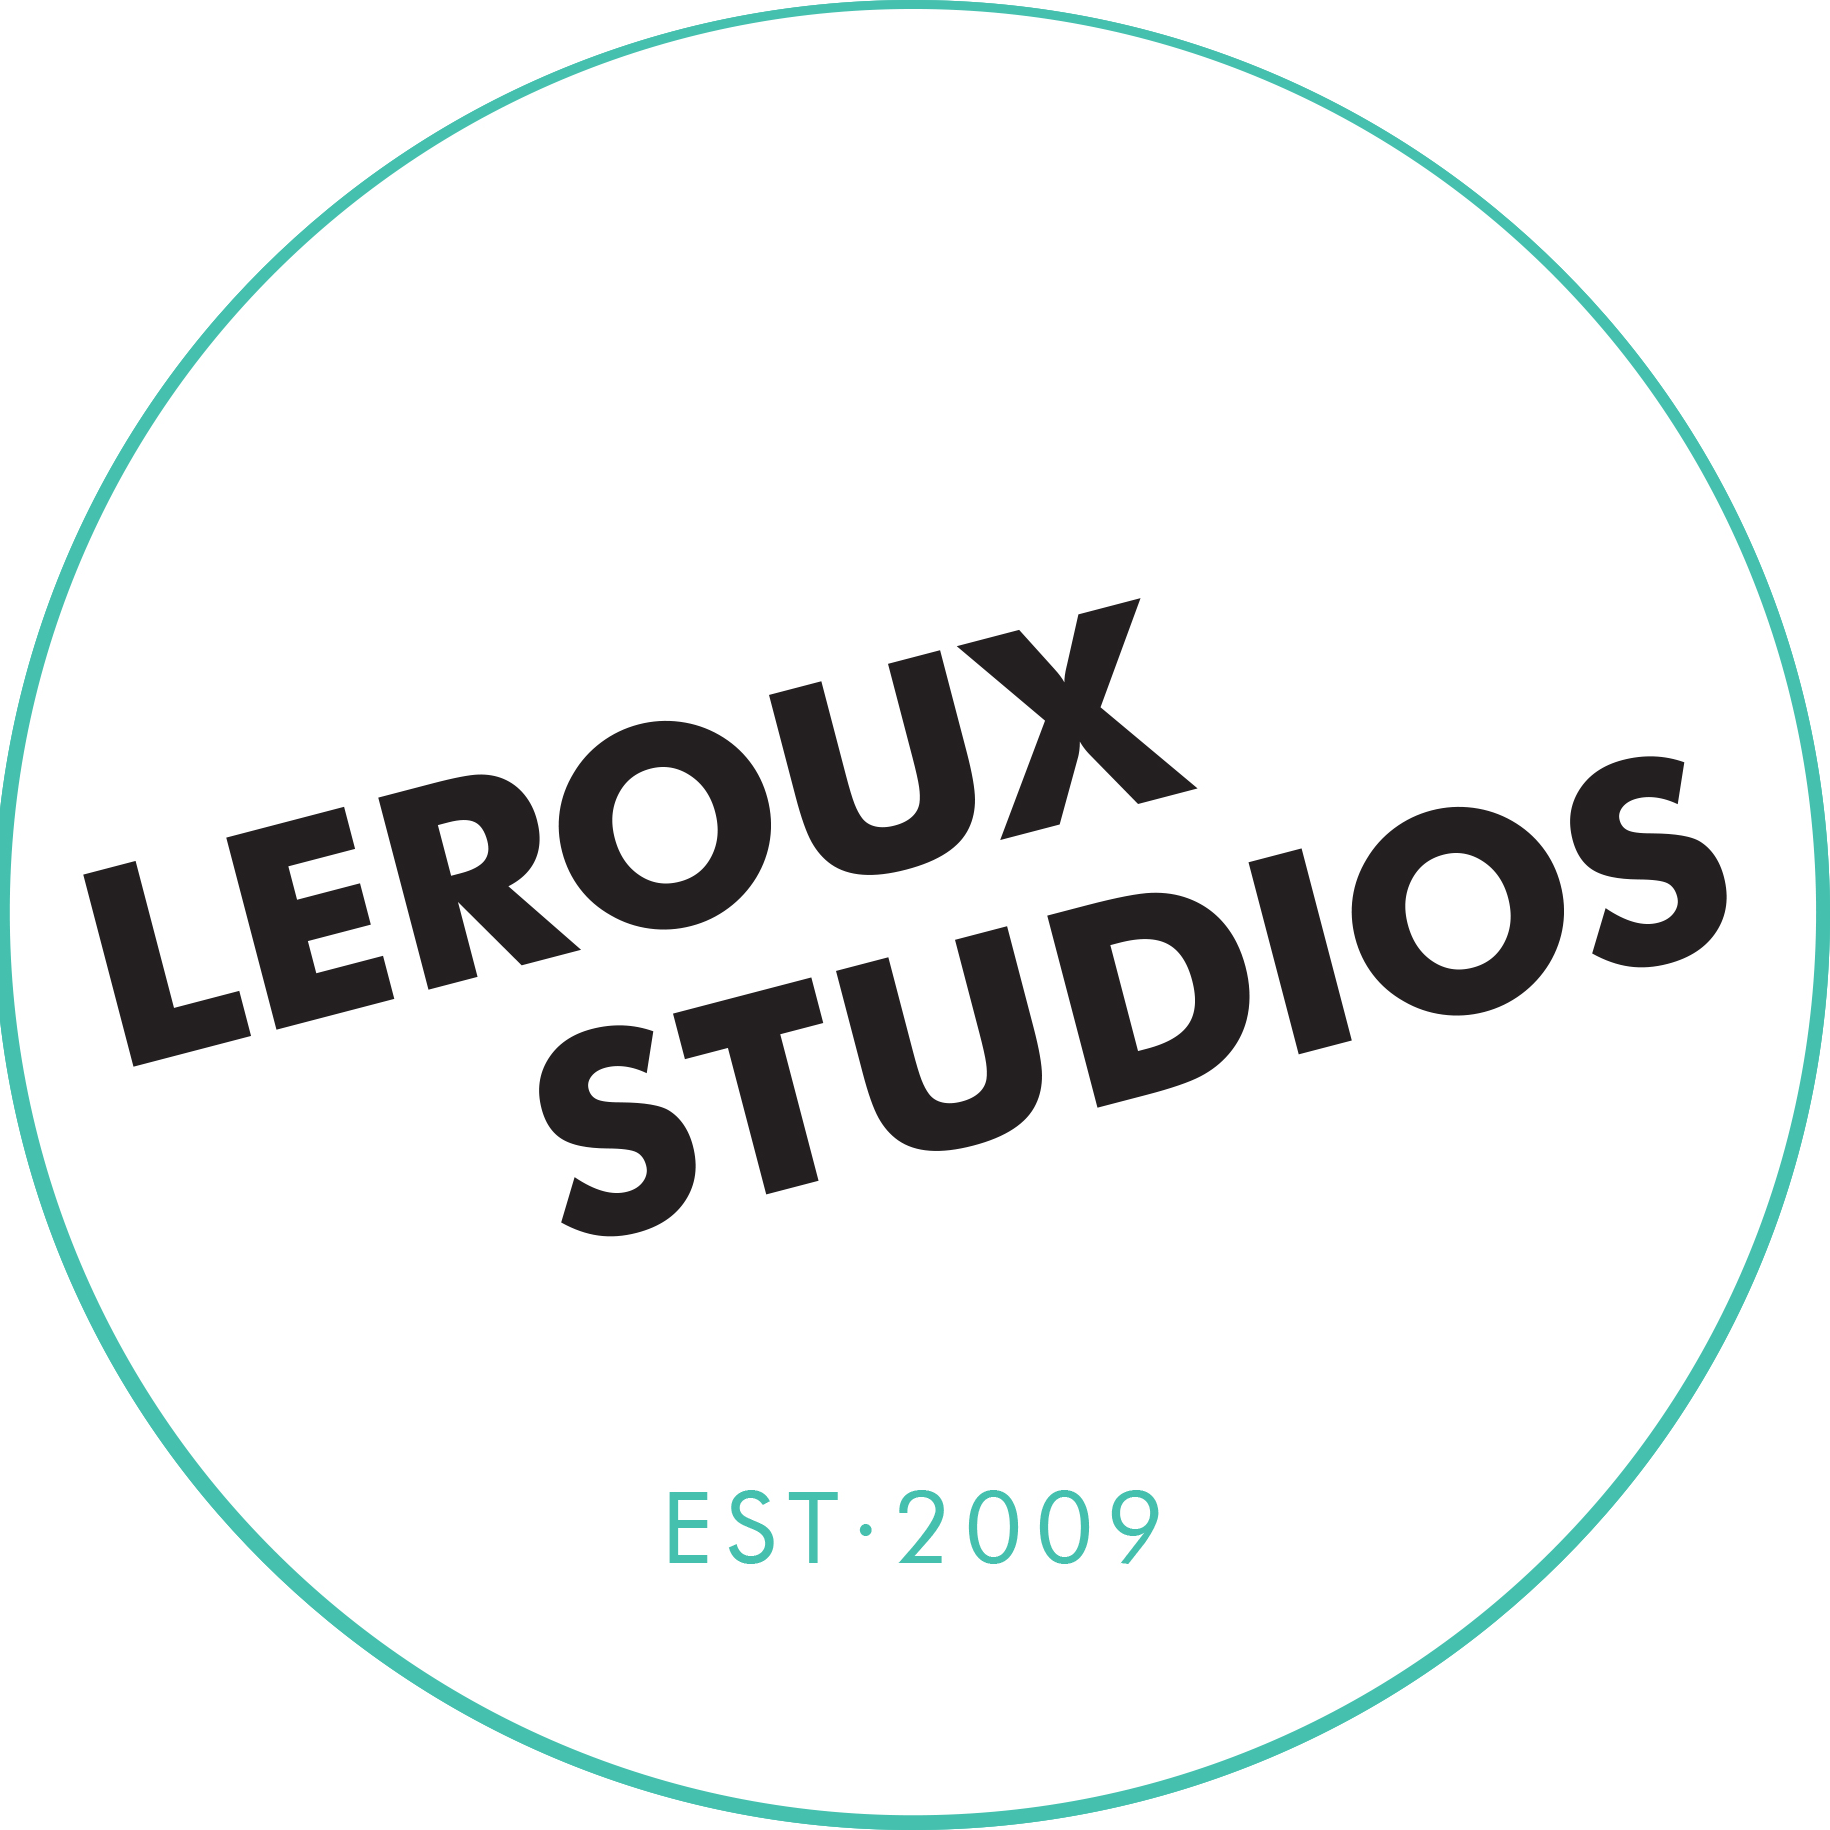 Leroux Studios Logo